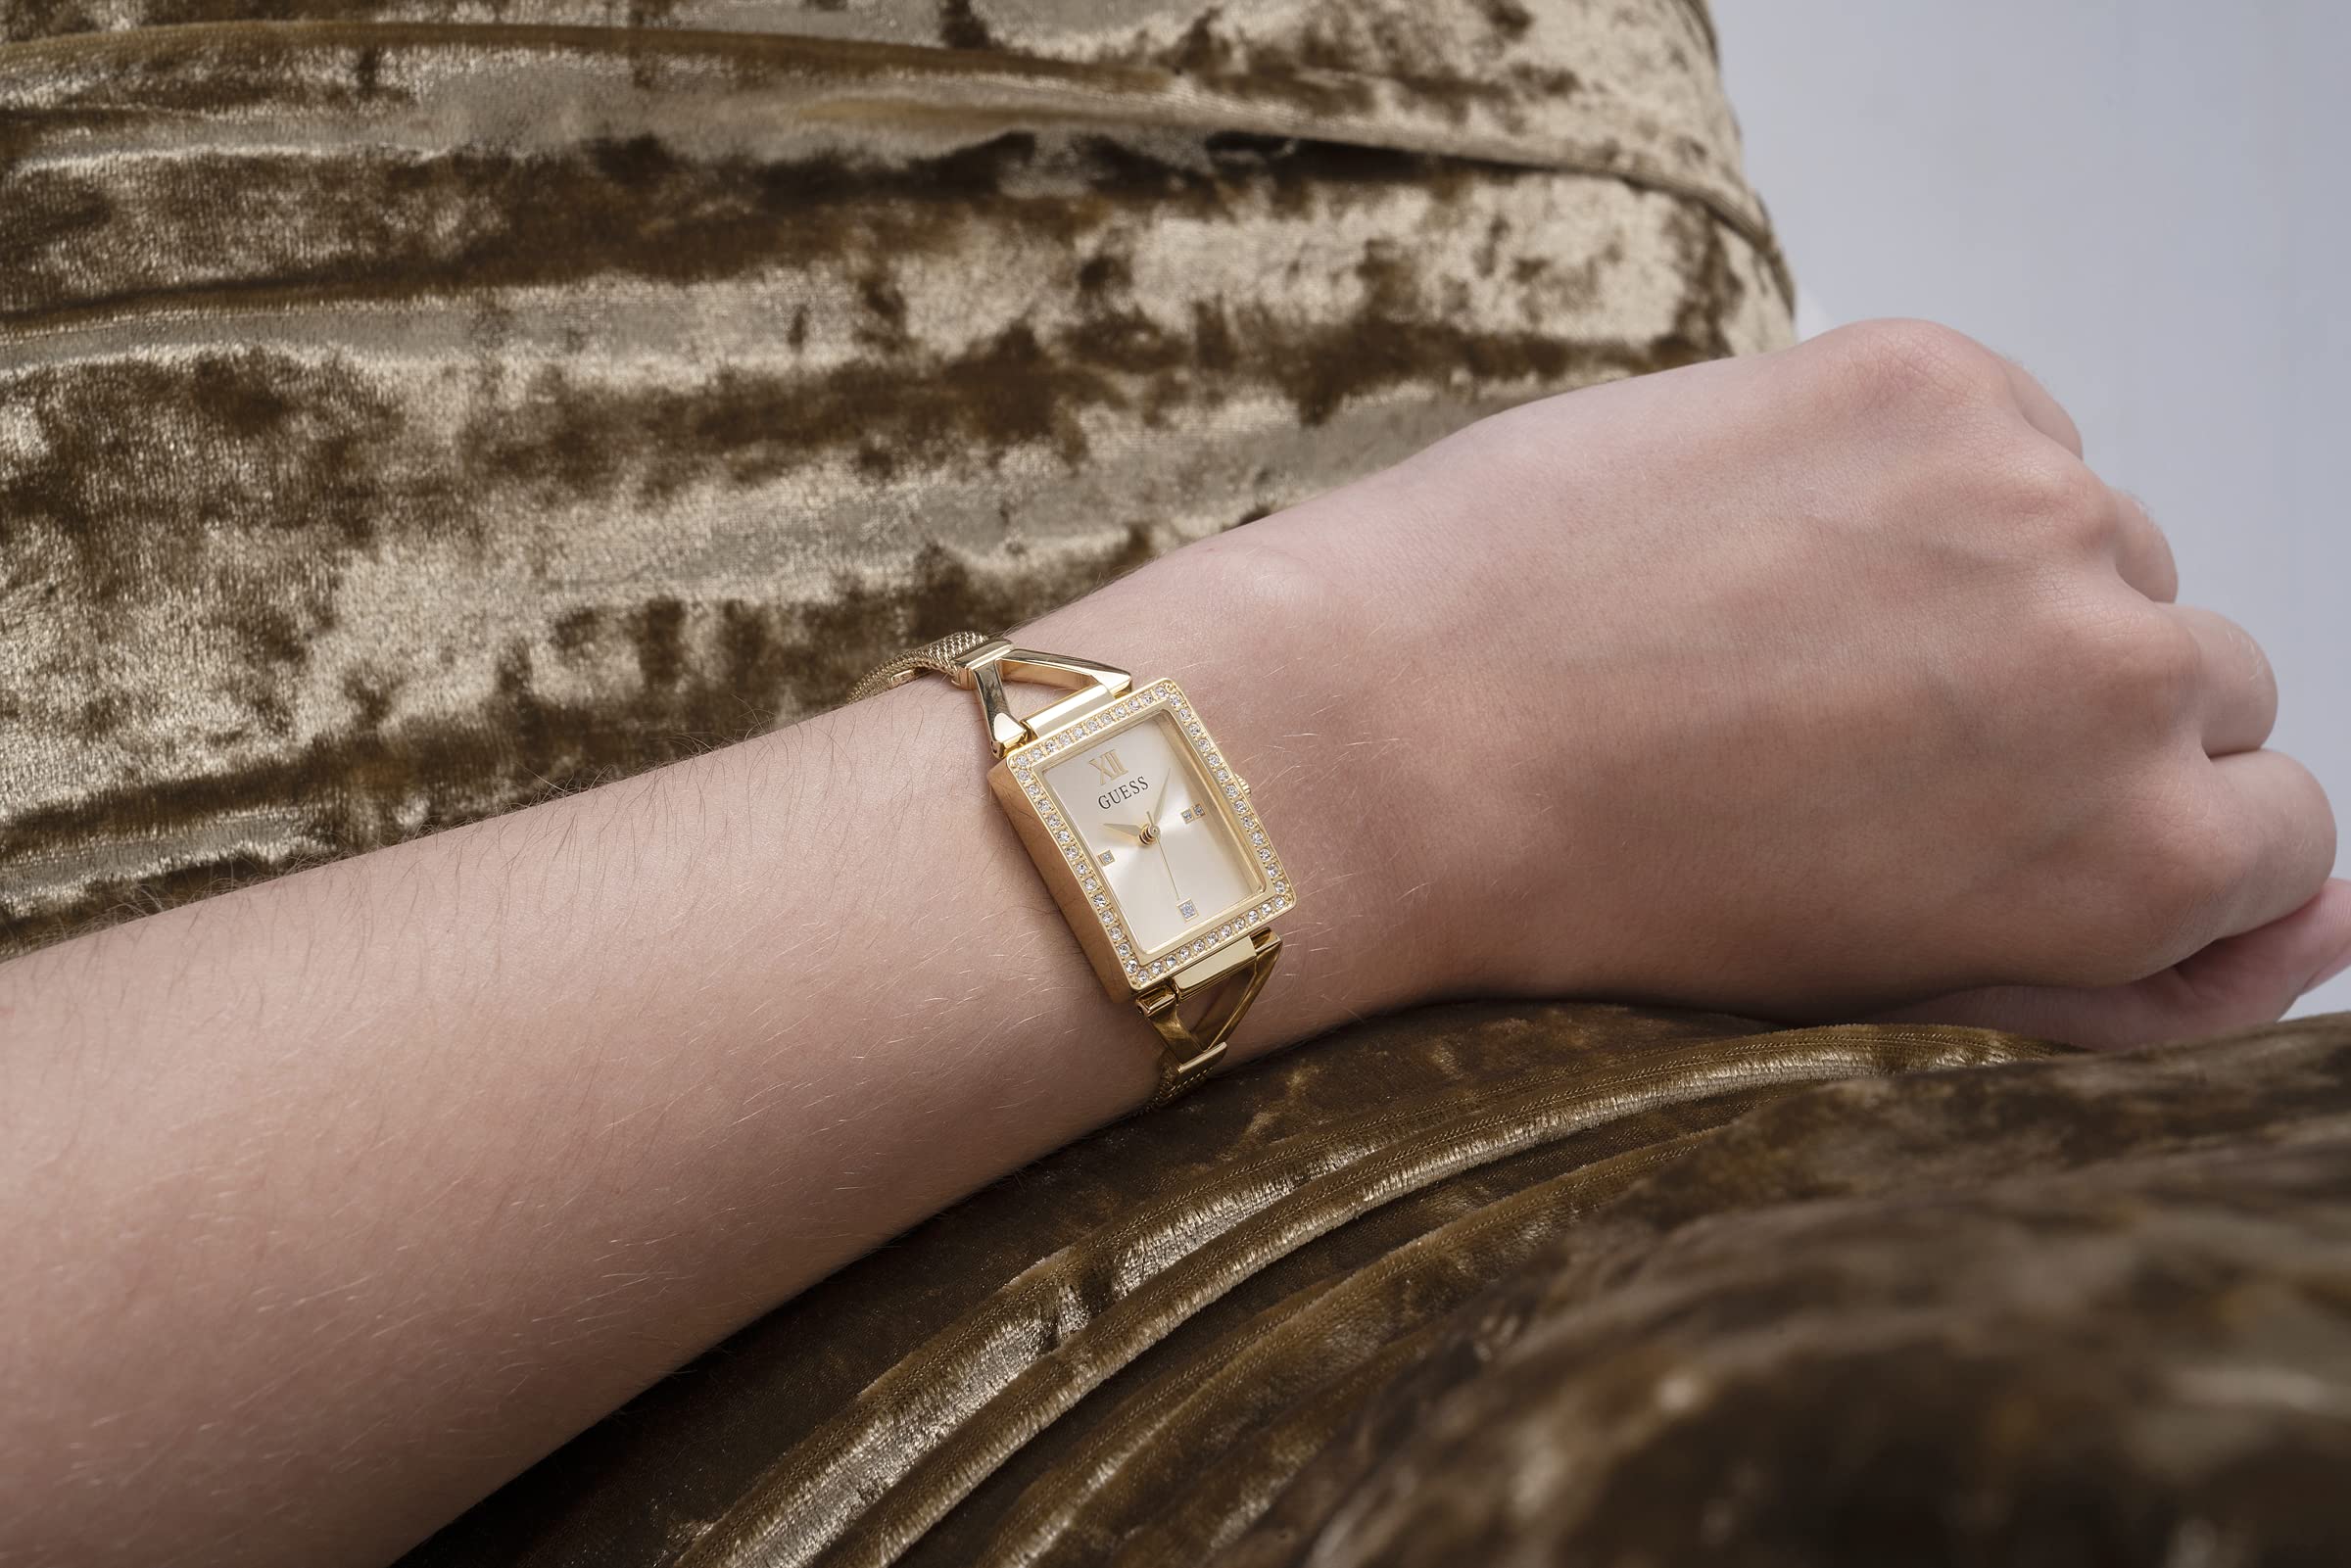 GUESS Women's Jewelry Square Glitz 22mm Ladies Japanese Quartz Watch